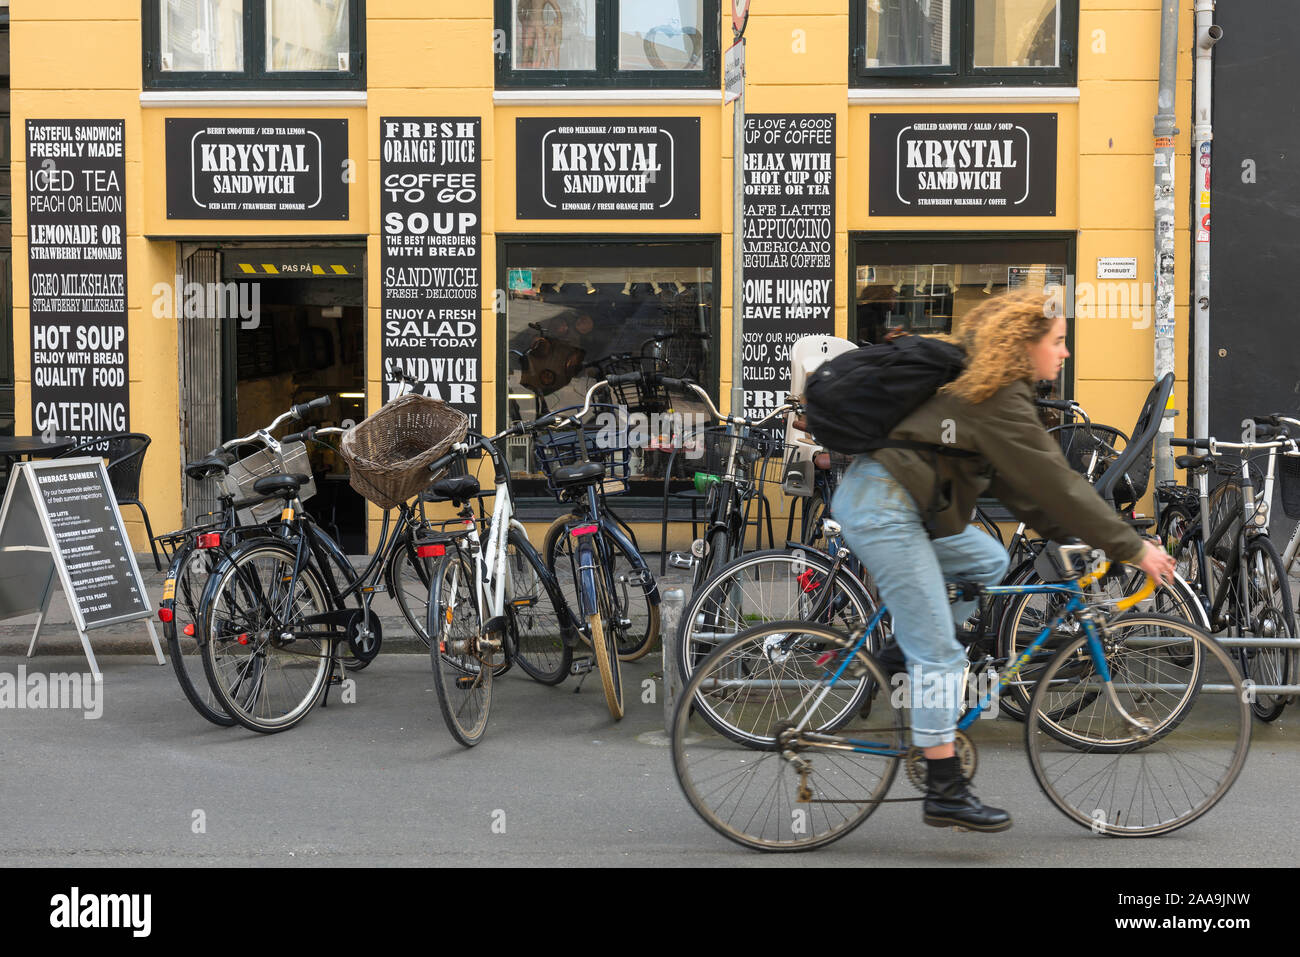 Copenhagen Latin Quarter, view of a young Danish woman cycling past a popular sandwich shop in Krystalgade in the old town Latin Quarter of Copenhagen. Stock Photo